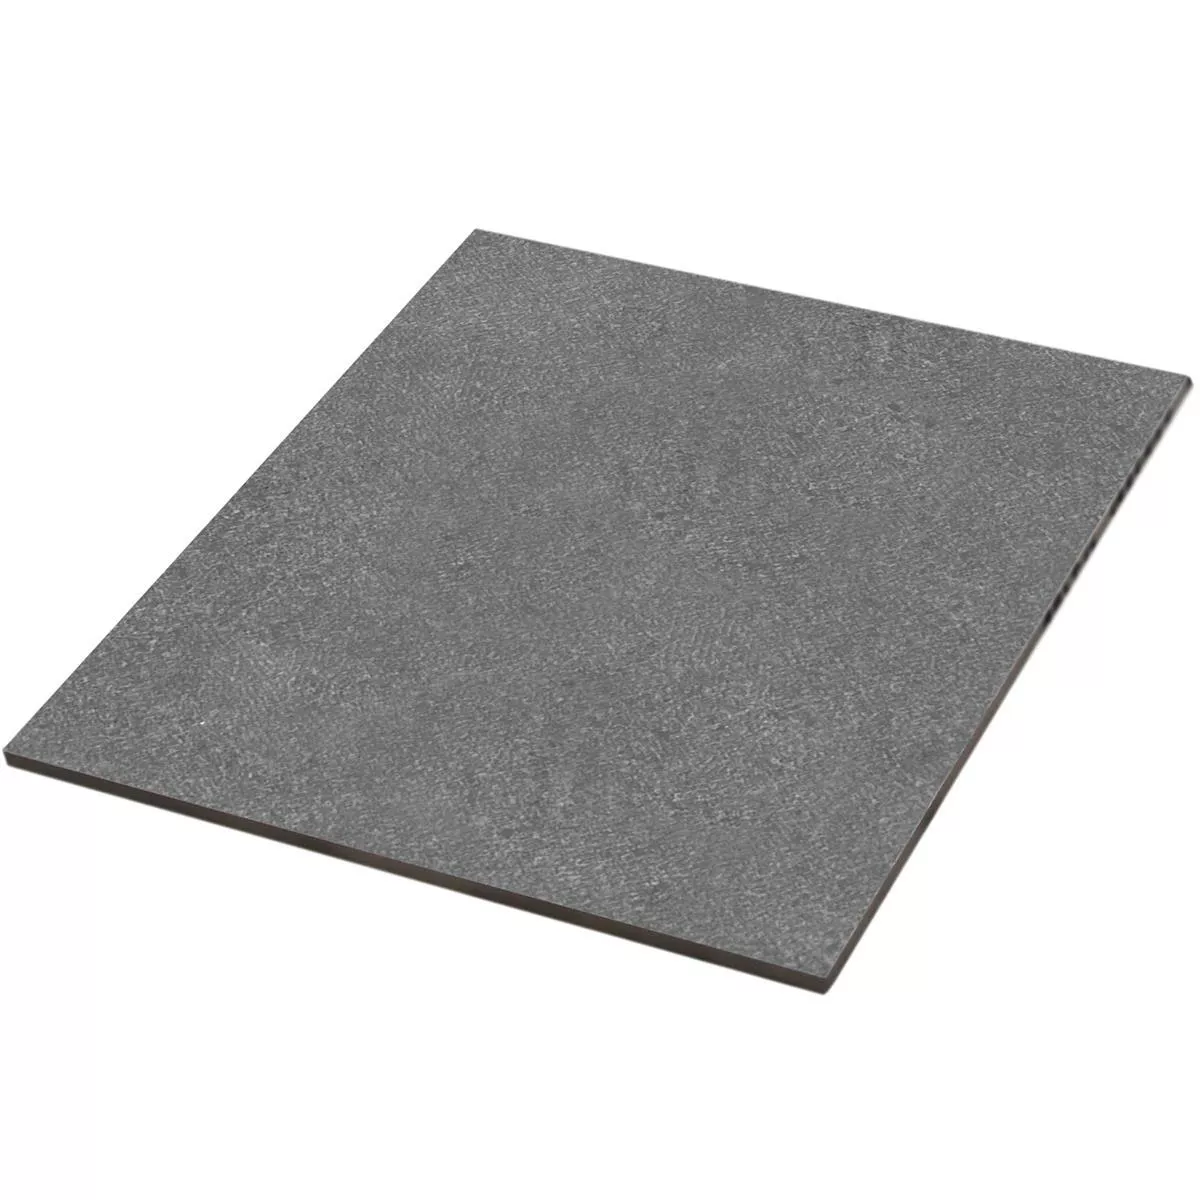 Sample Floor Tiles Galilea Unglazed R10B Anthracite 30x30cm